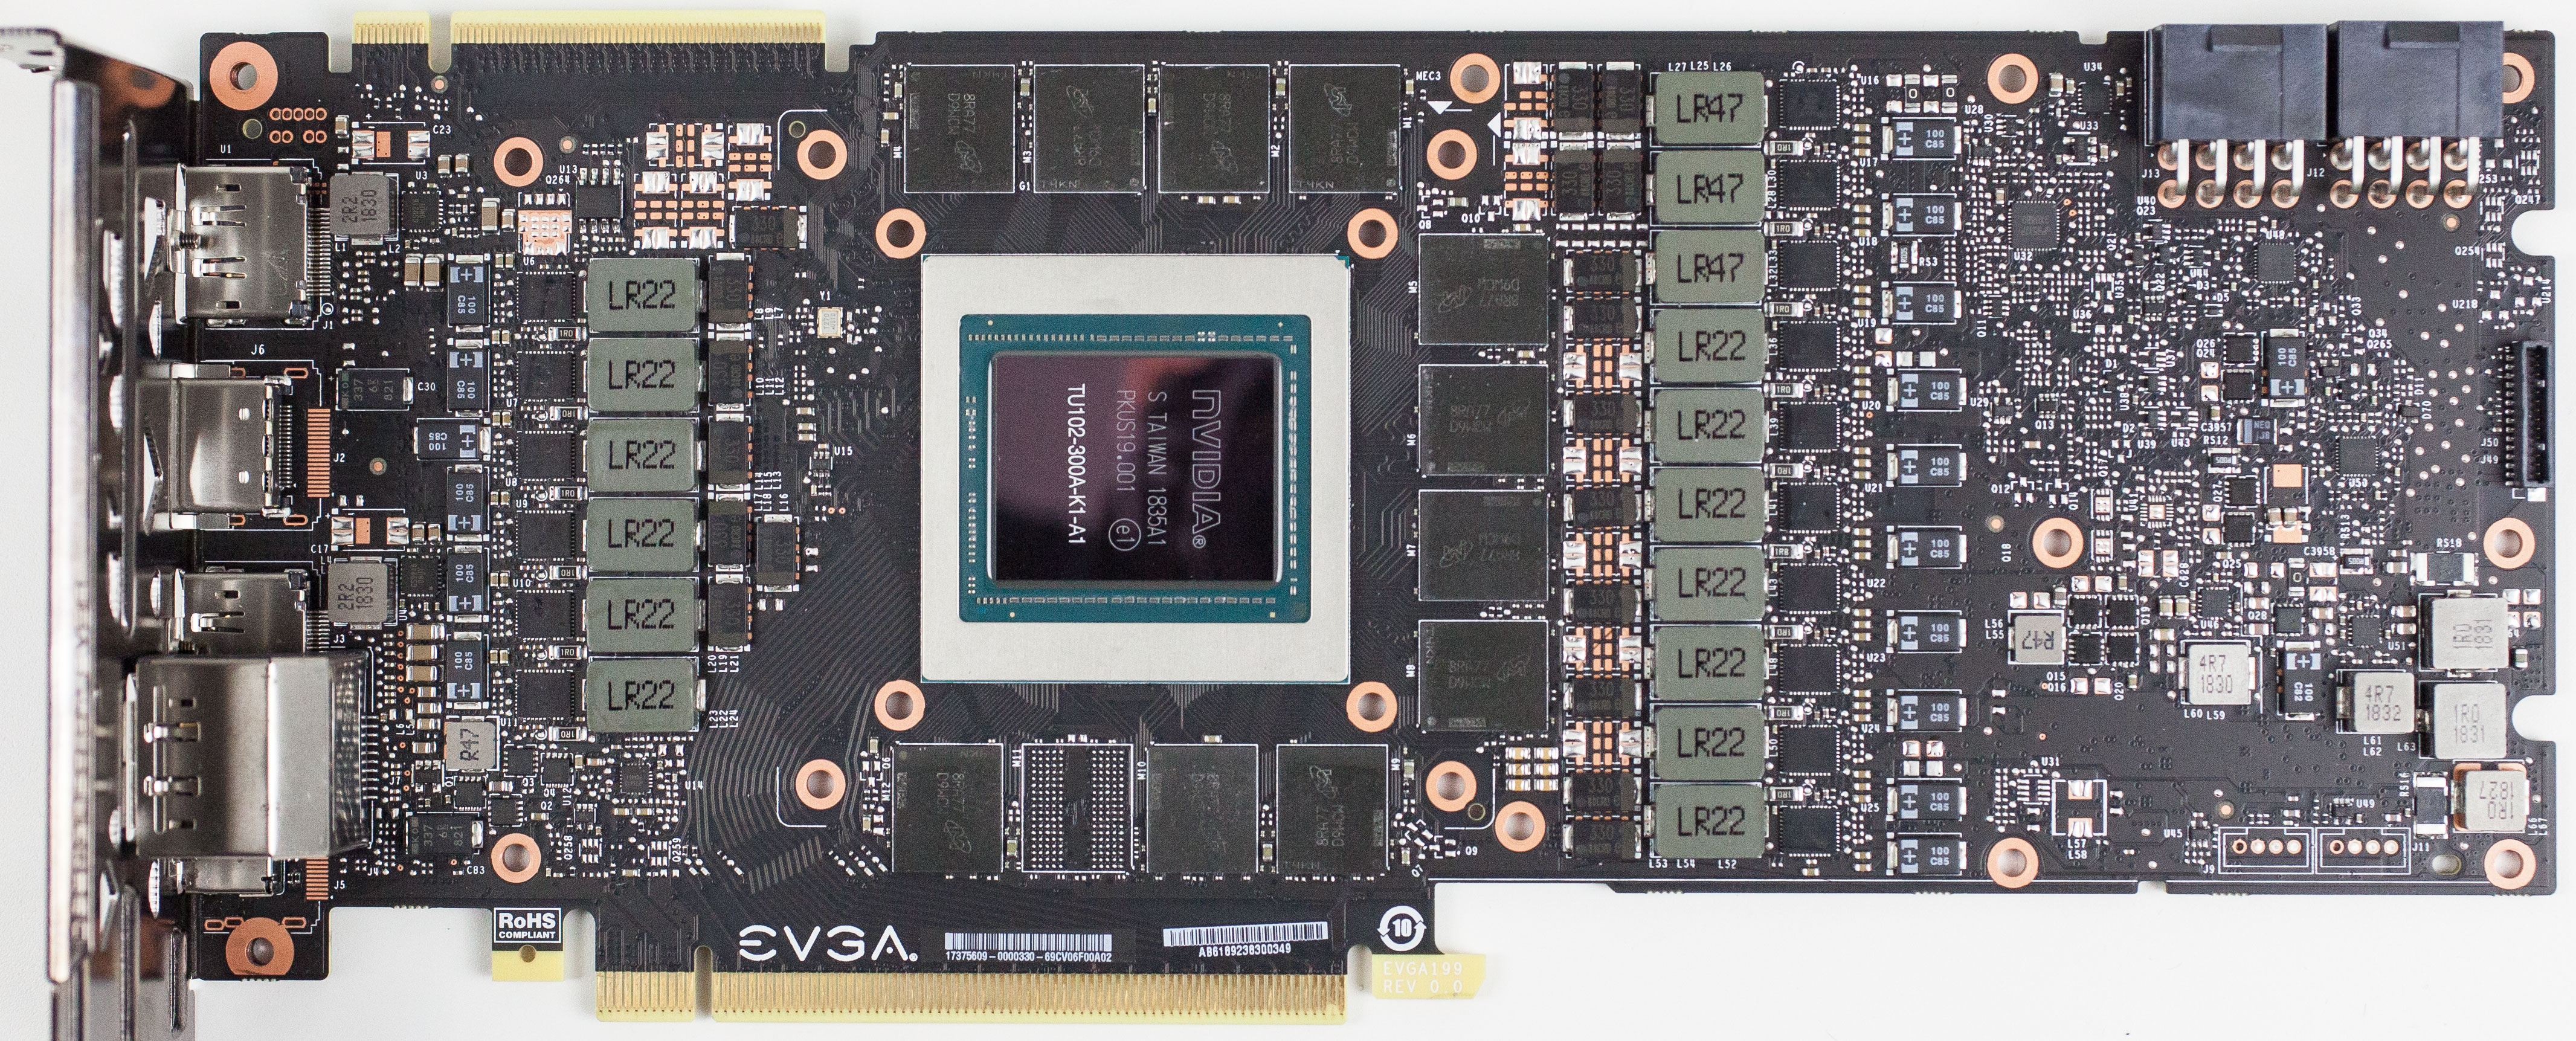 EVGA GeForce 2080 Ti XC Ultra 11 GB Review - Circuit Board Analysis | TechPowerUp